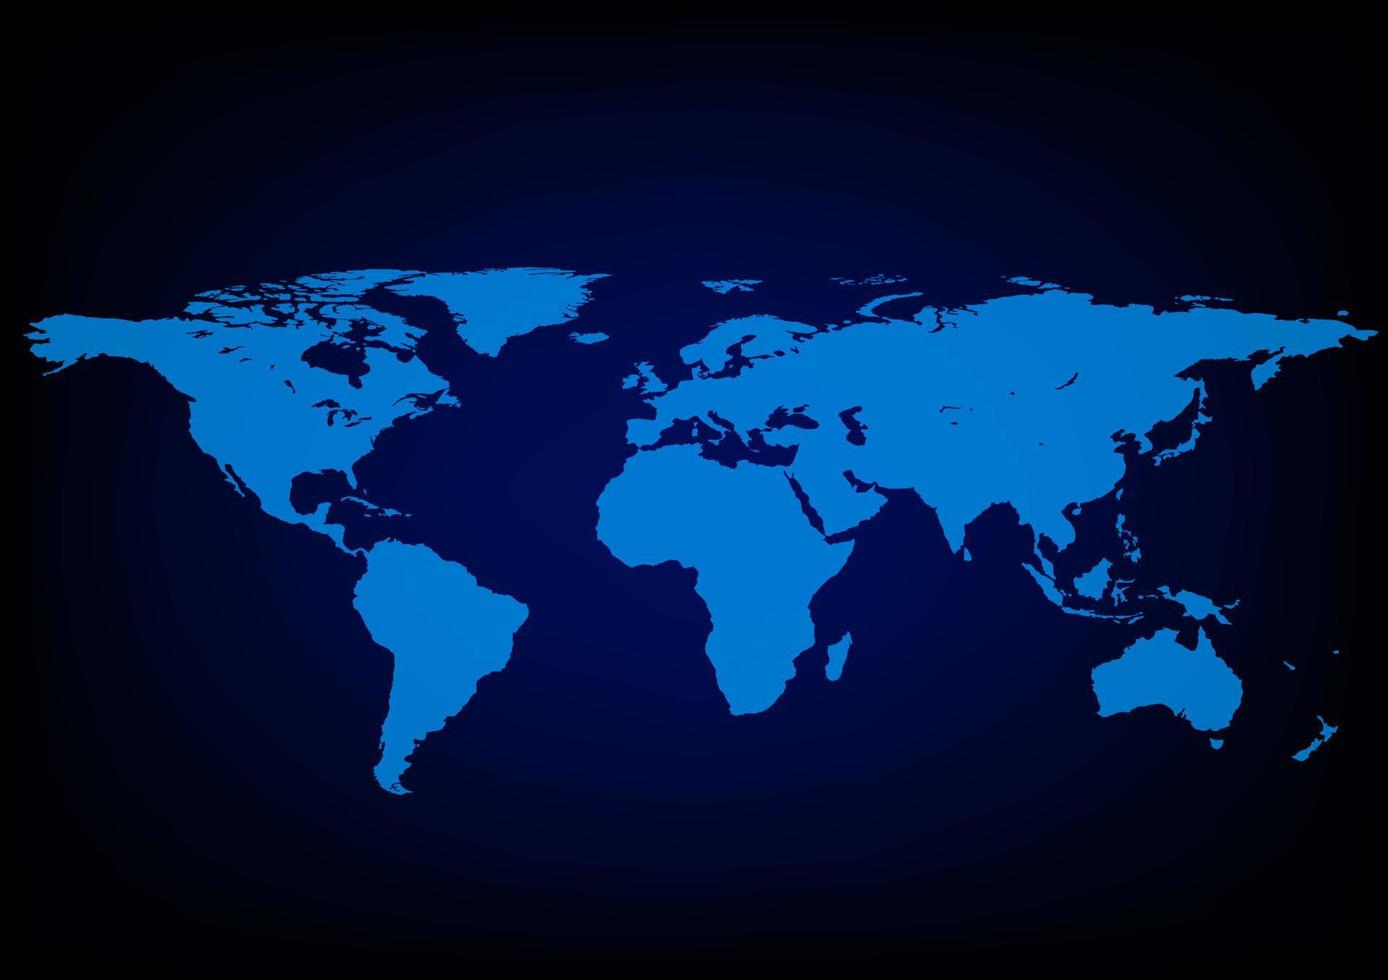 Diseño gráfico mapa mundo fondo azul ilustración vectorial vector